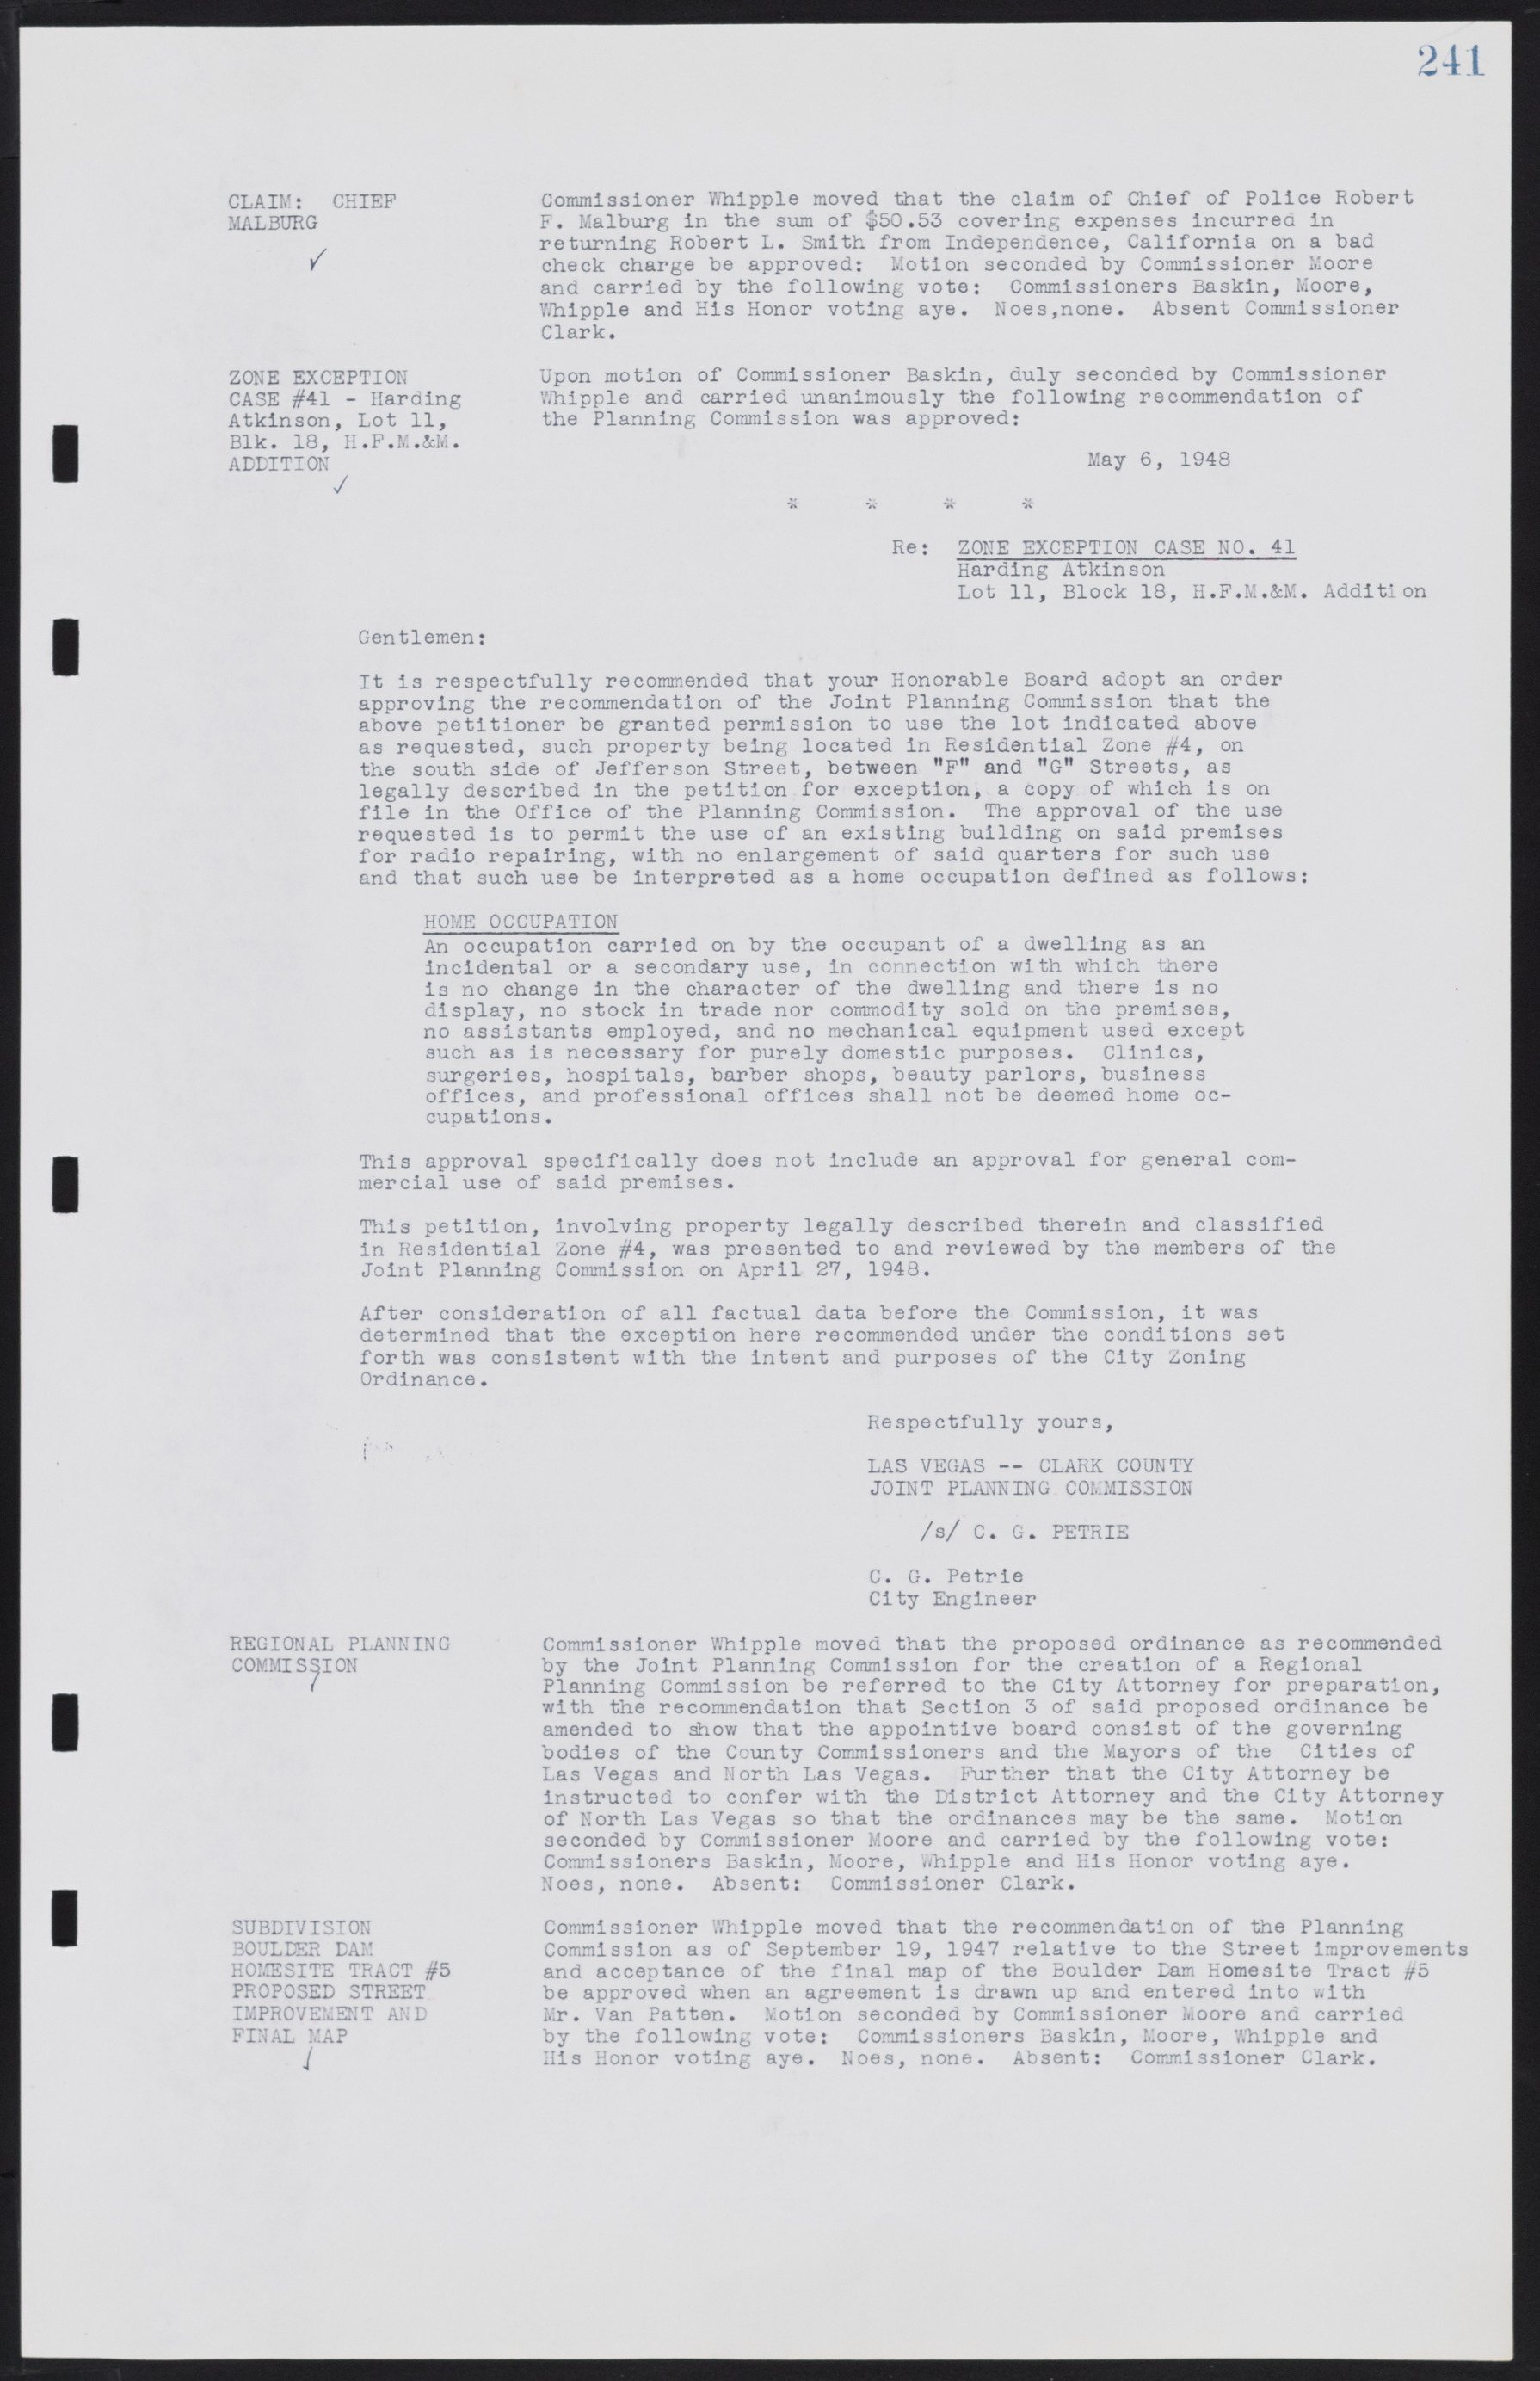 Las Vegas City Commission Minutes, January 7, 1947 to October 26, 1949, lvc000006-263